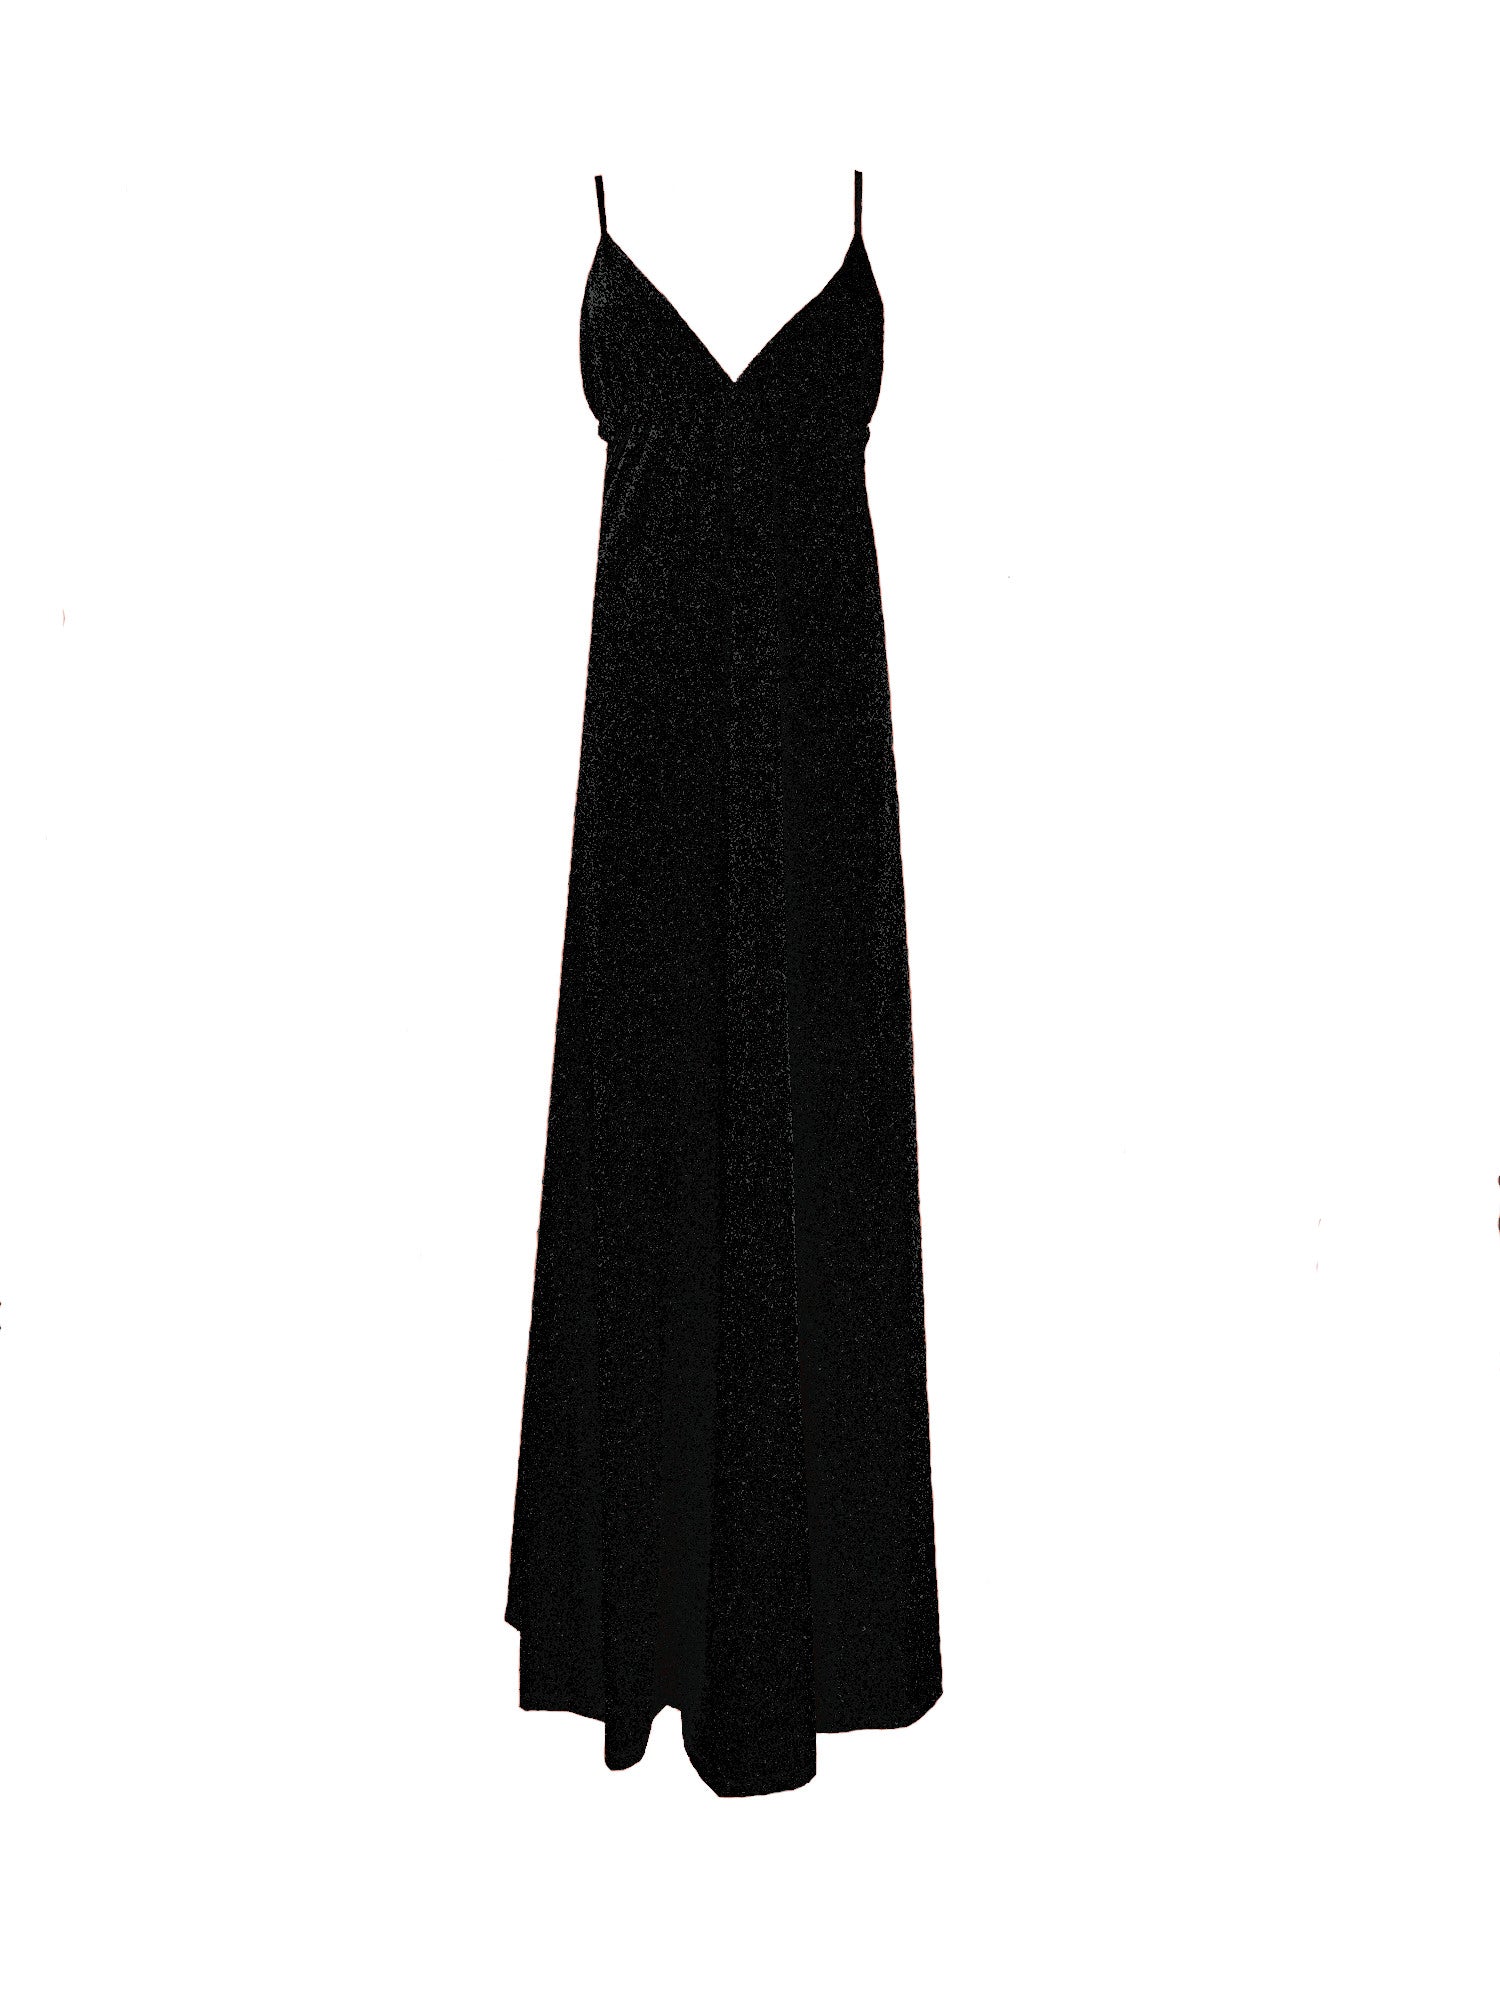 MICOL - long anthracite lurex dress